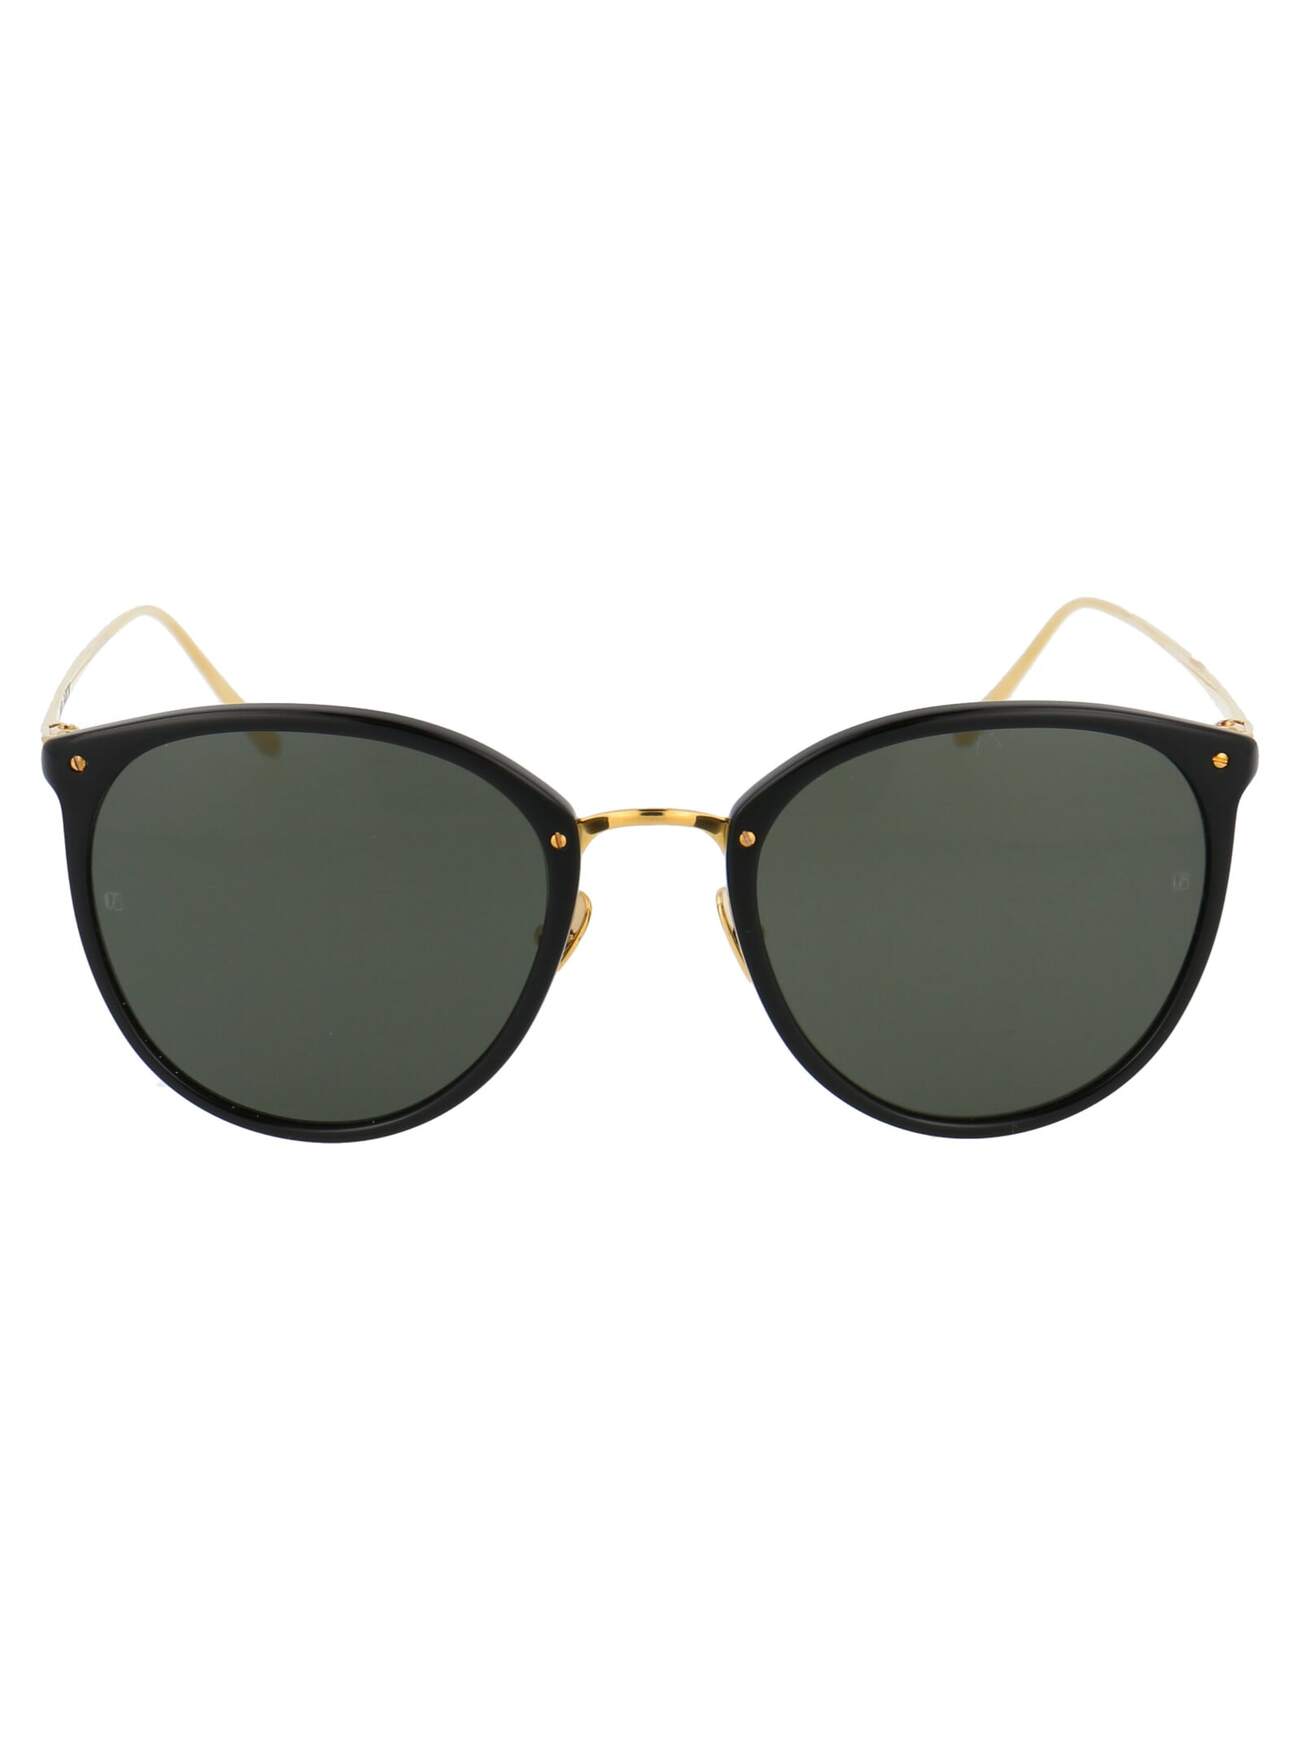 Linda Farrow Calthorpe Sunglasses in black / gold / grey / yellow